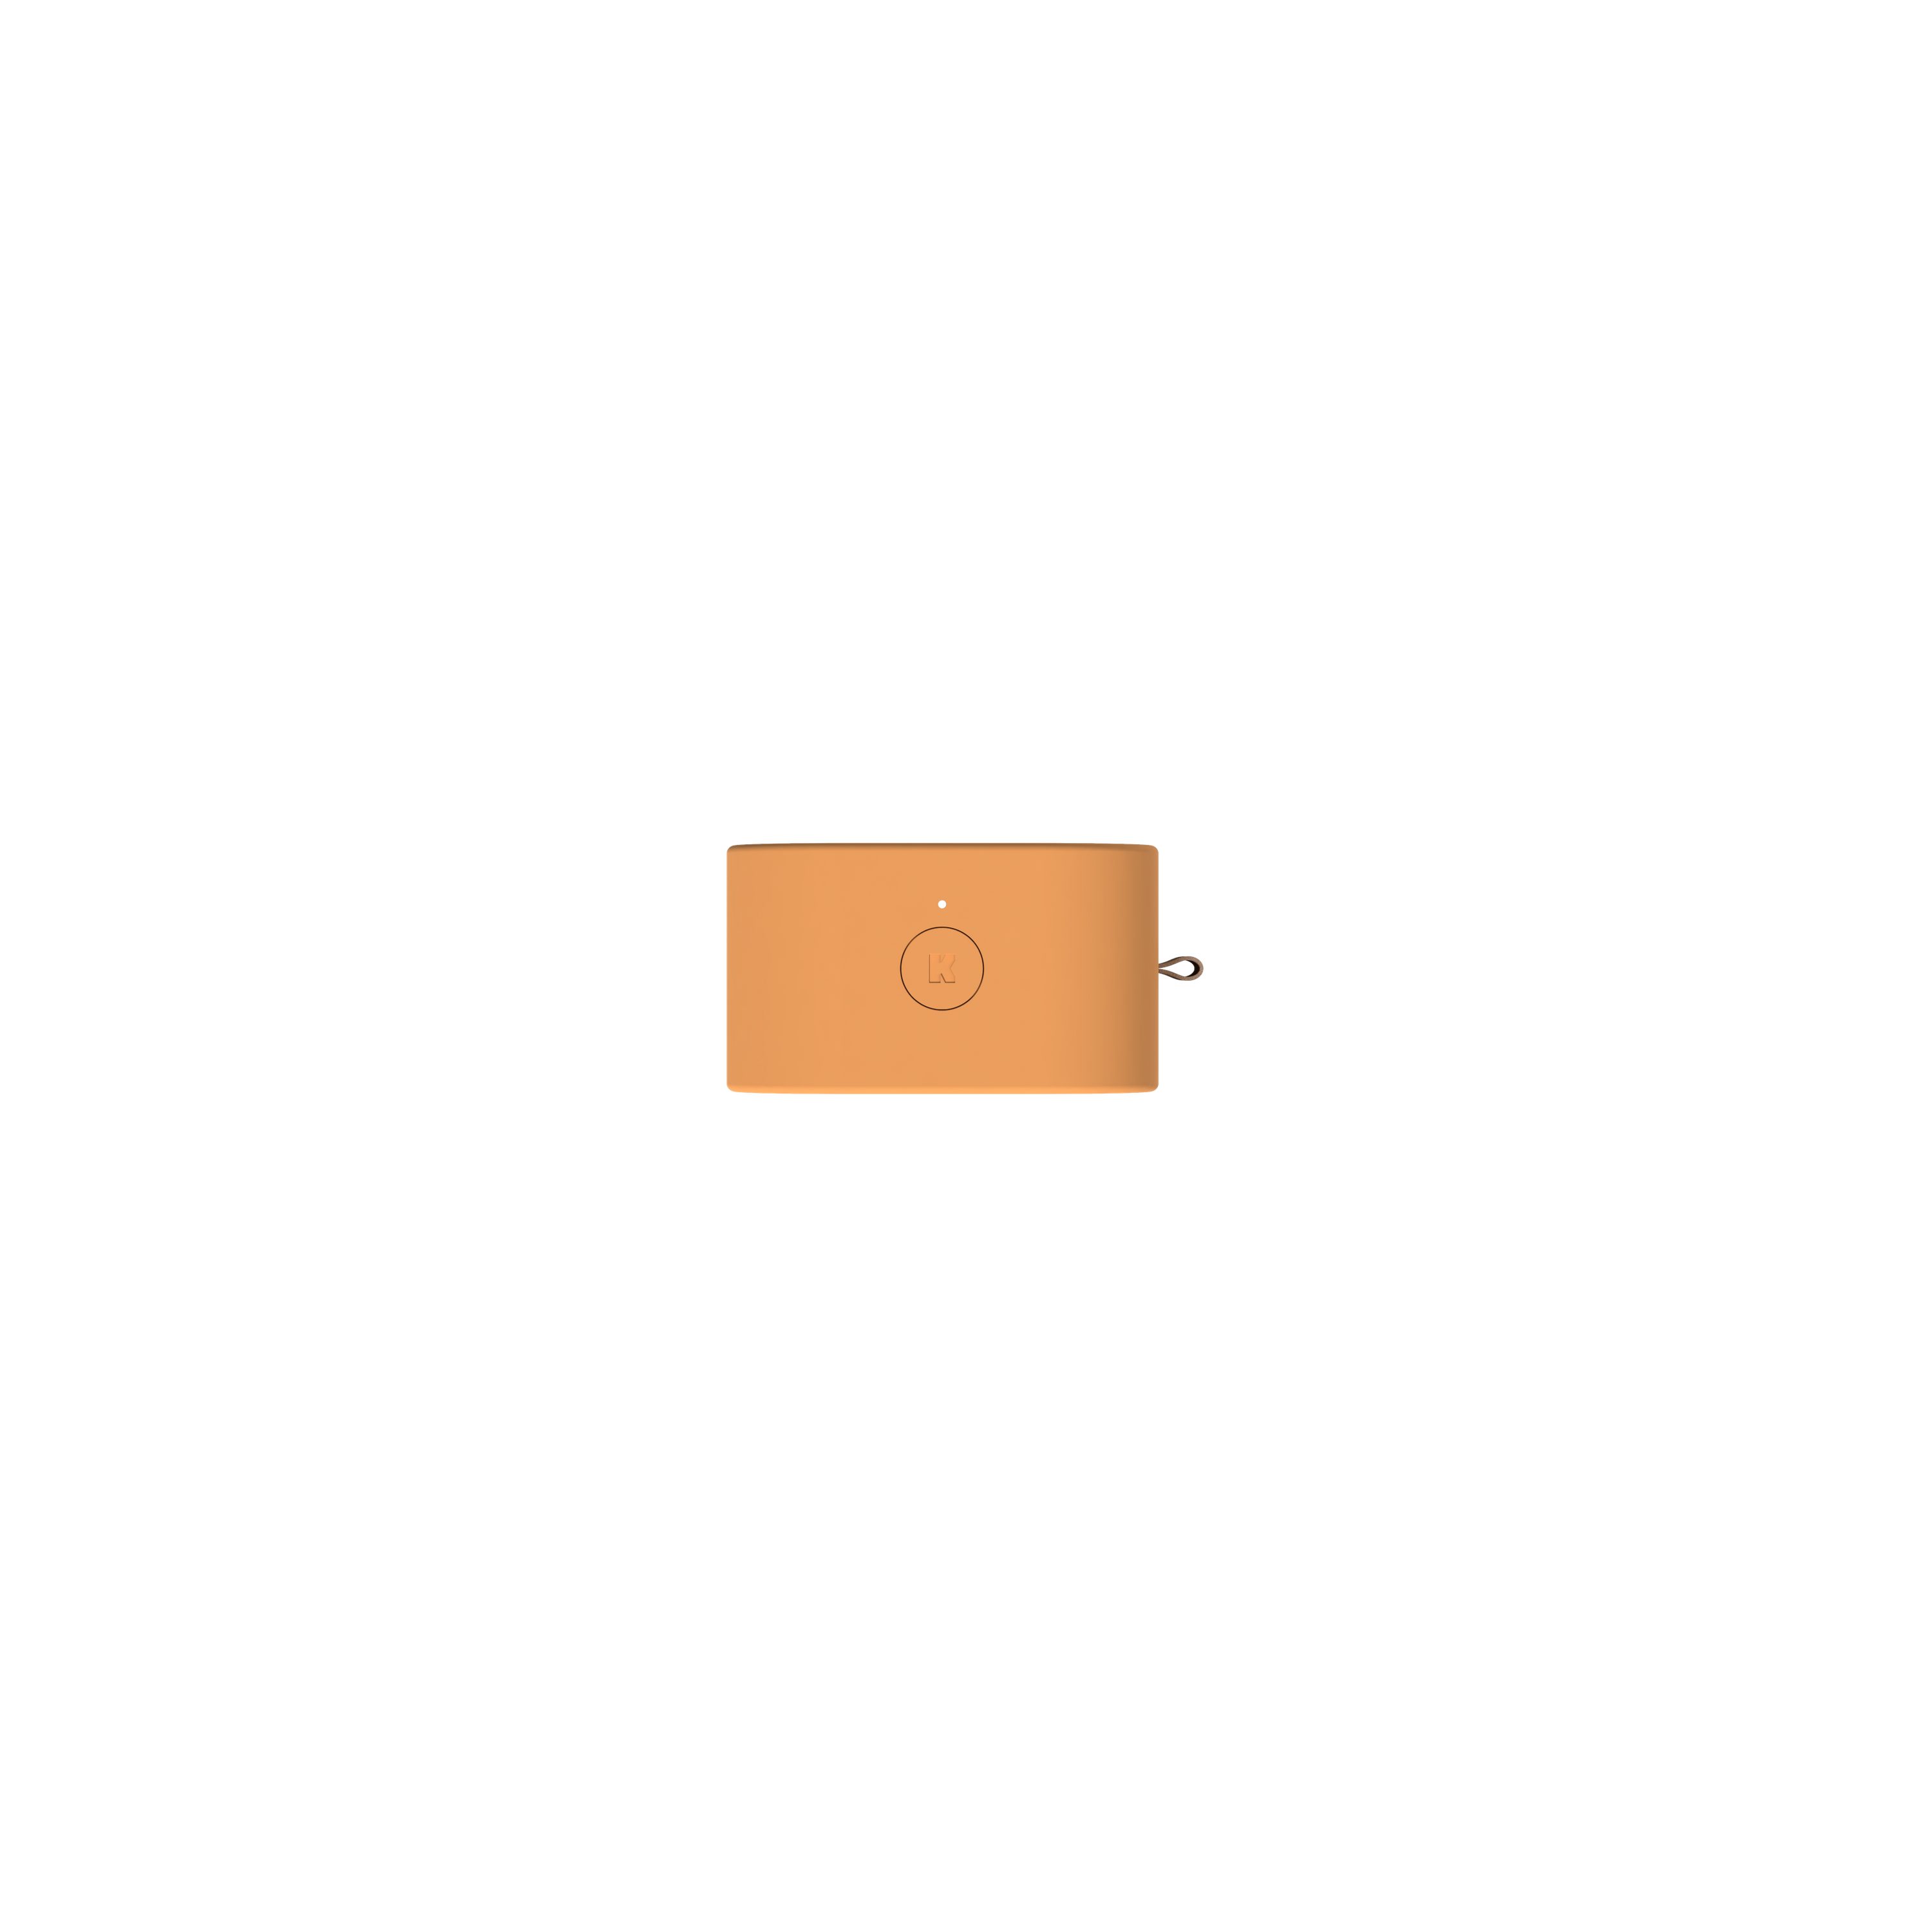 sunny Lautsprecher) Lautsprecher aCUBE orange (aCUBE Bluetooth Lautsprecher KREAFUNK Bluetooth